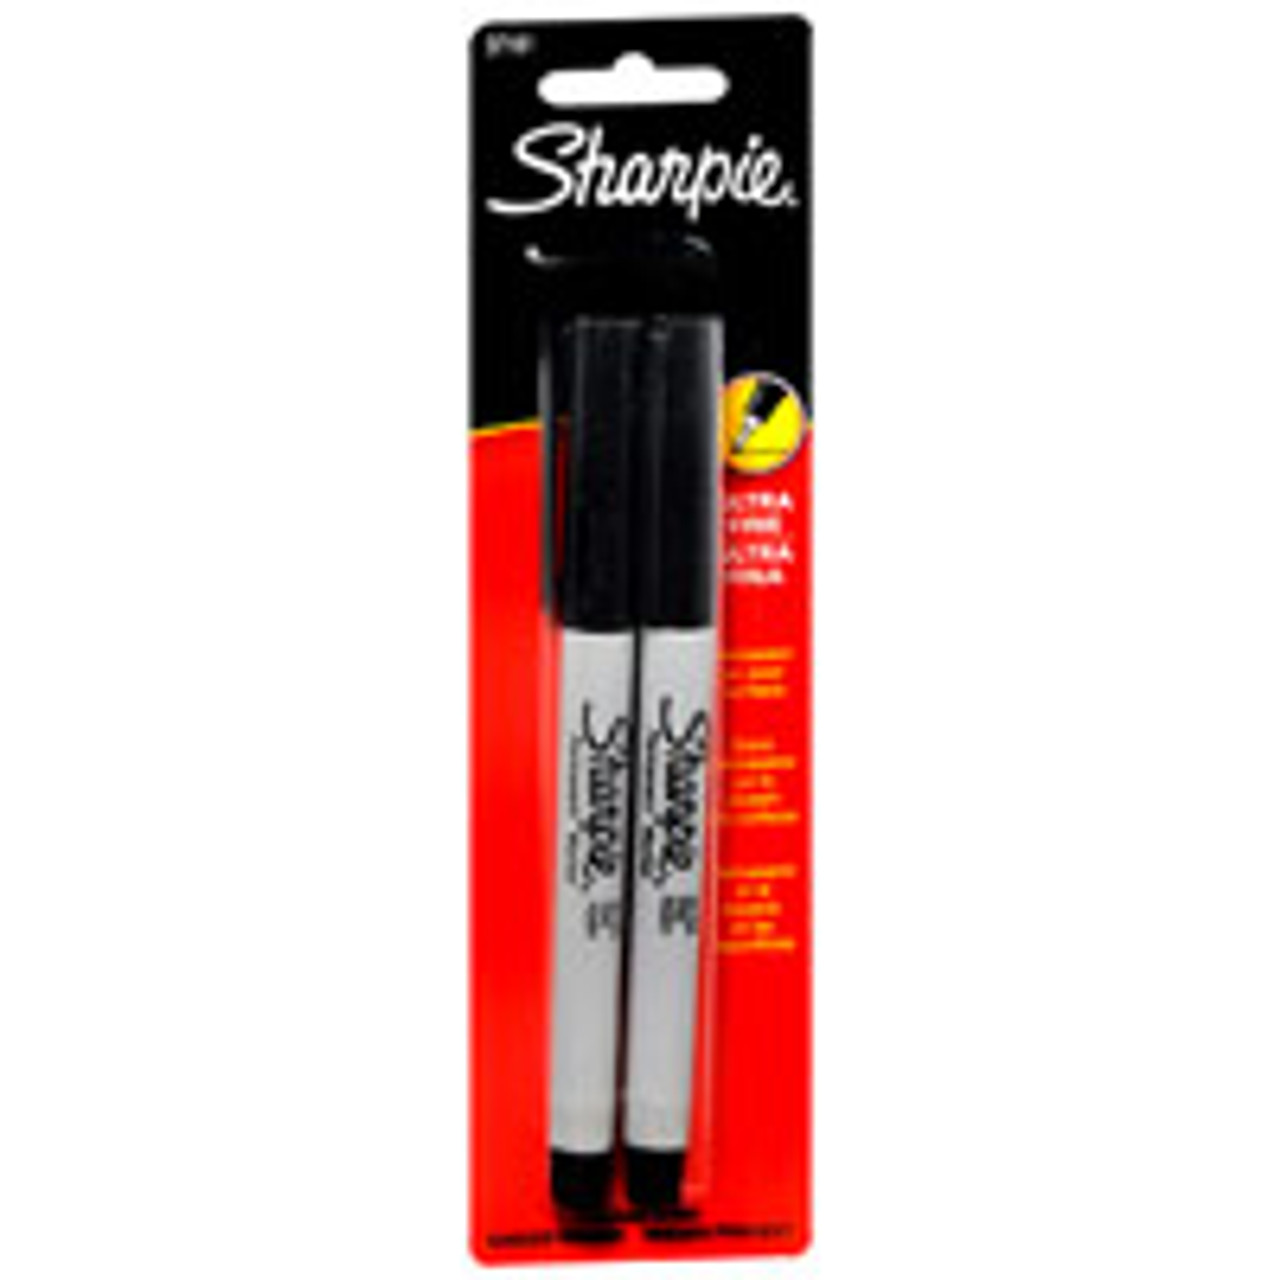 Sharpie Marker, Fine, Permanent - 2 markers